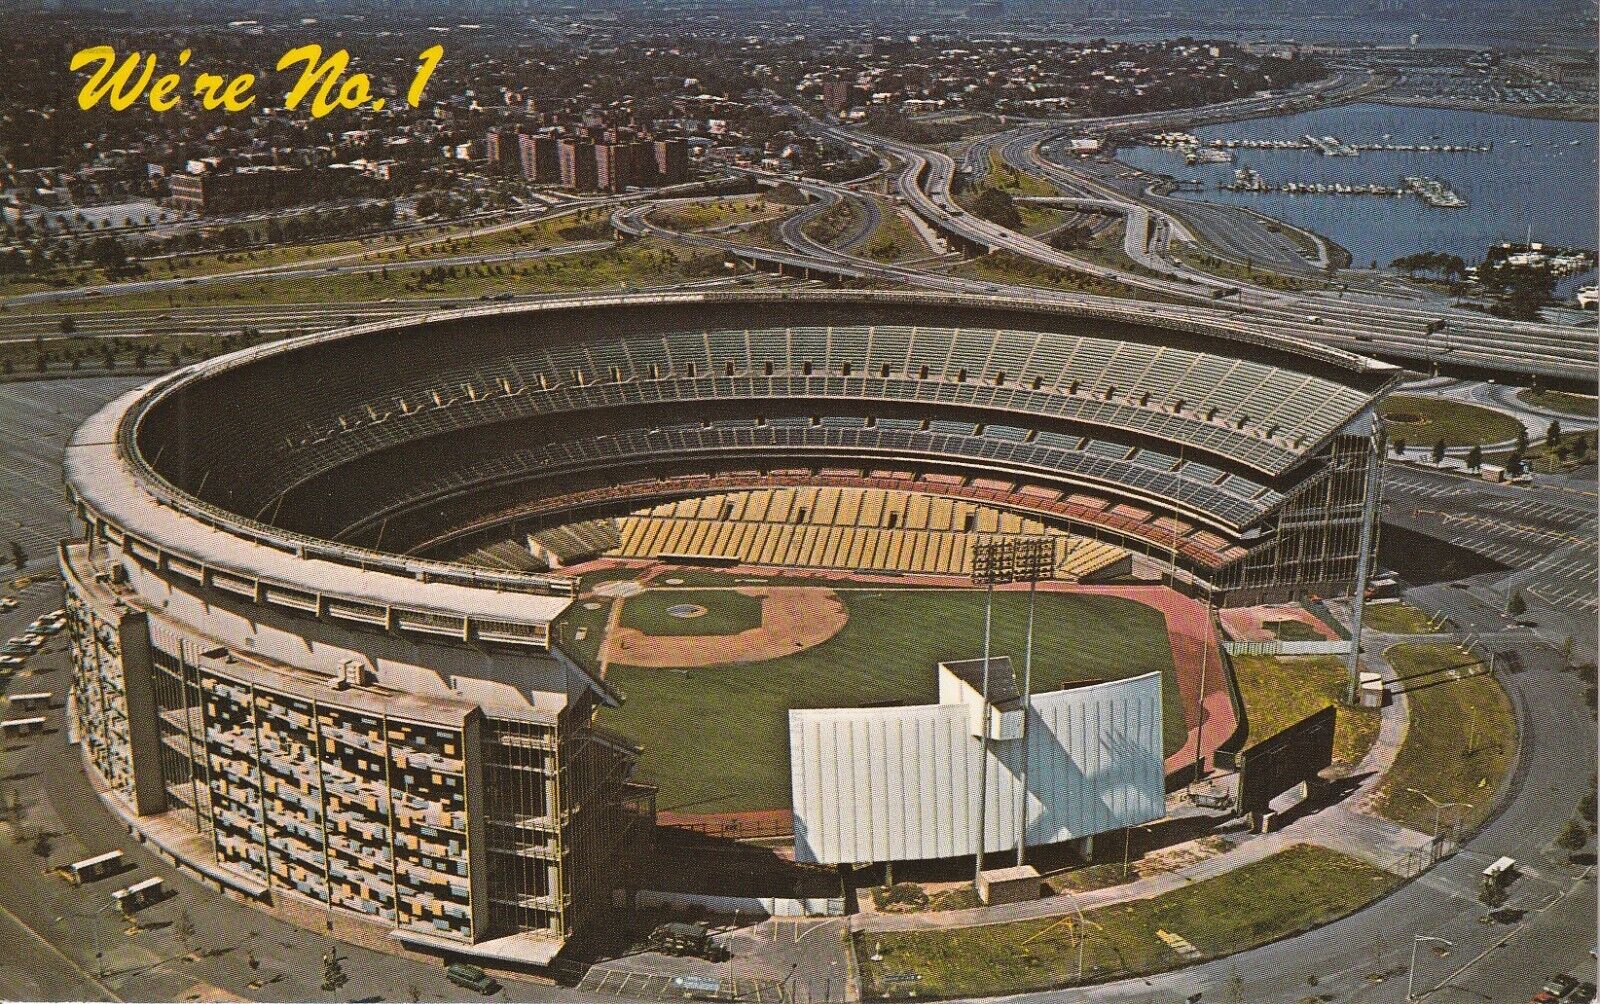 MLB New York Mets Baseball NFL Jets Football - Shea Stadium Postcard - We\'re #1